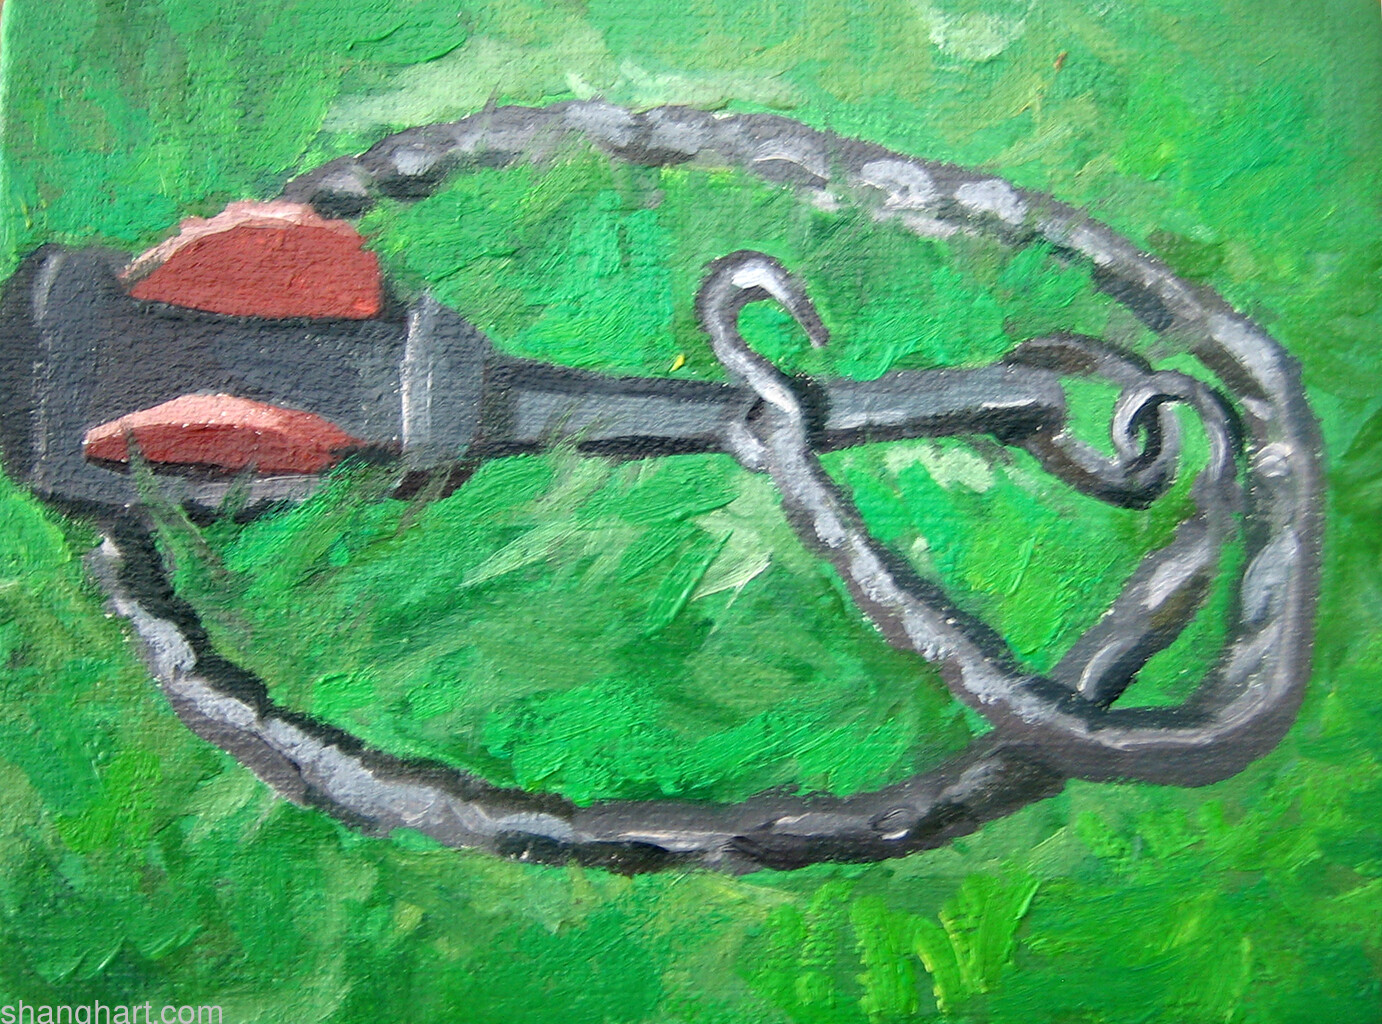 2008, 15x20cm, oil on canvas